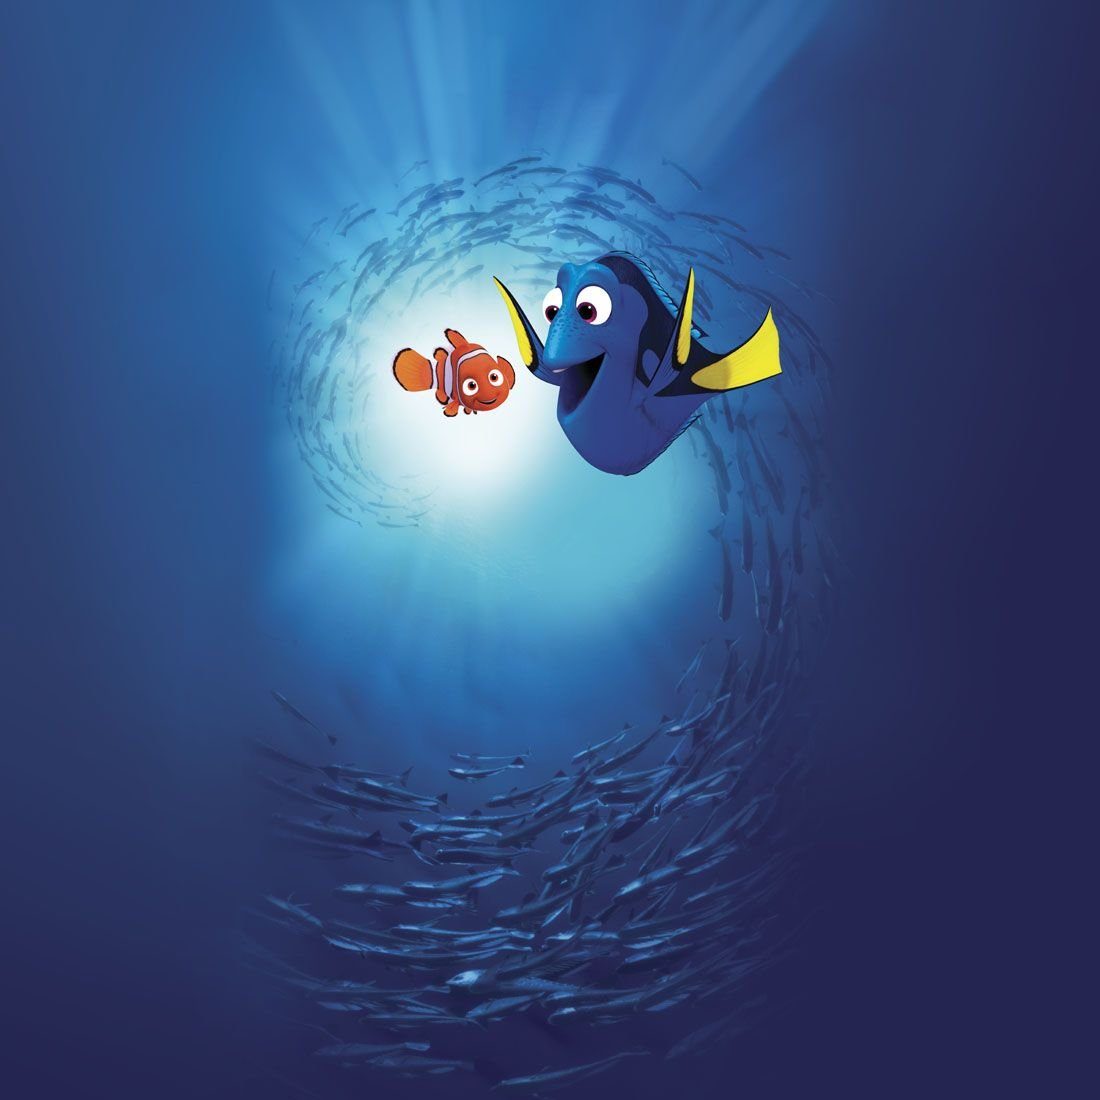 Cherokee Funktionsbluse bedruckter Disney Kasack & Kasack Damen "Dory mit Motiv Nemo" Bunt